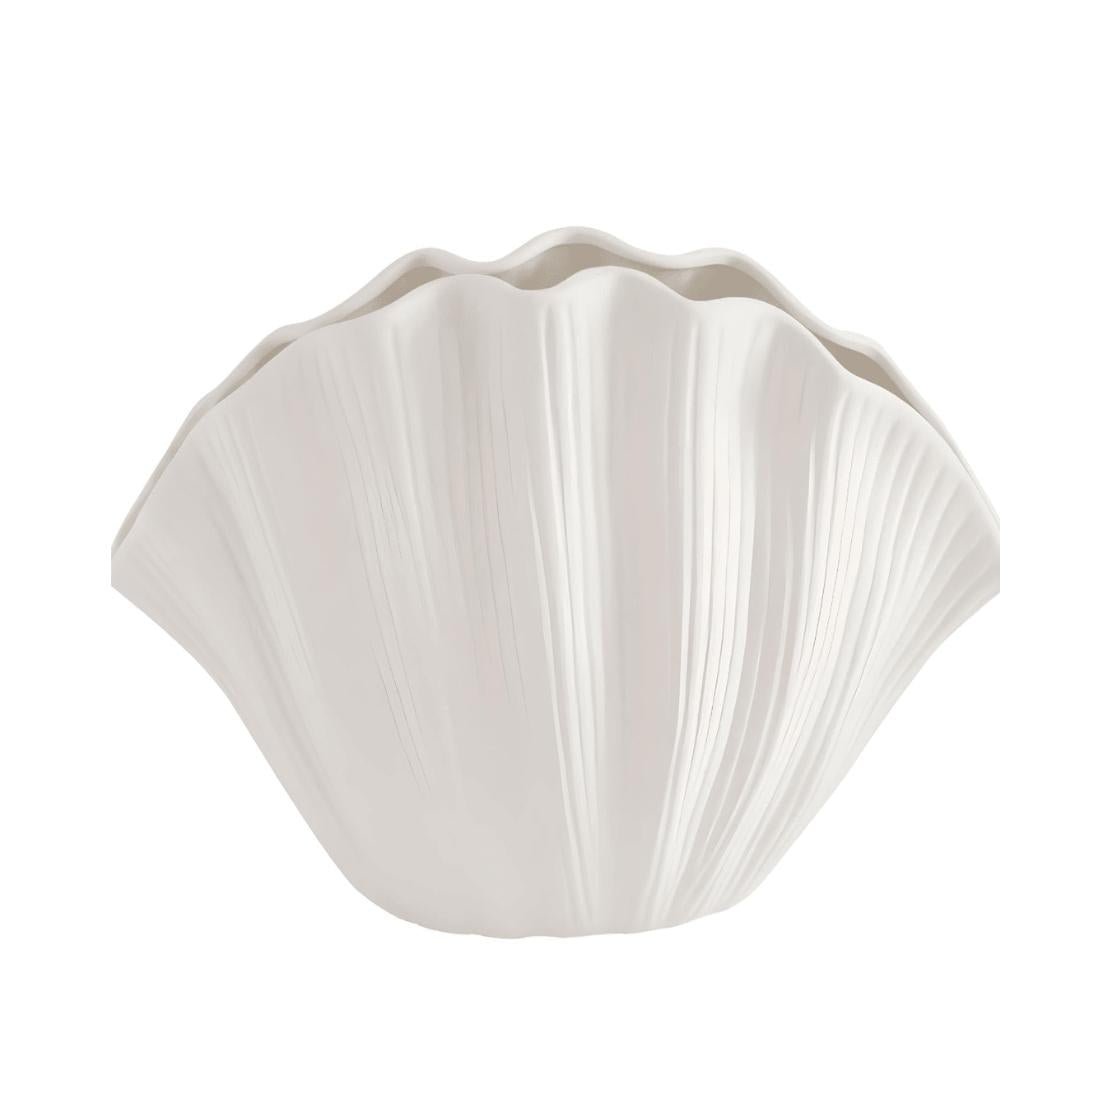 White, ceramic shell vase